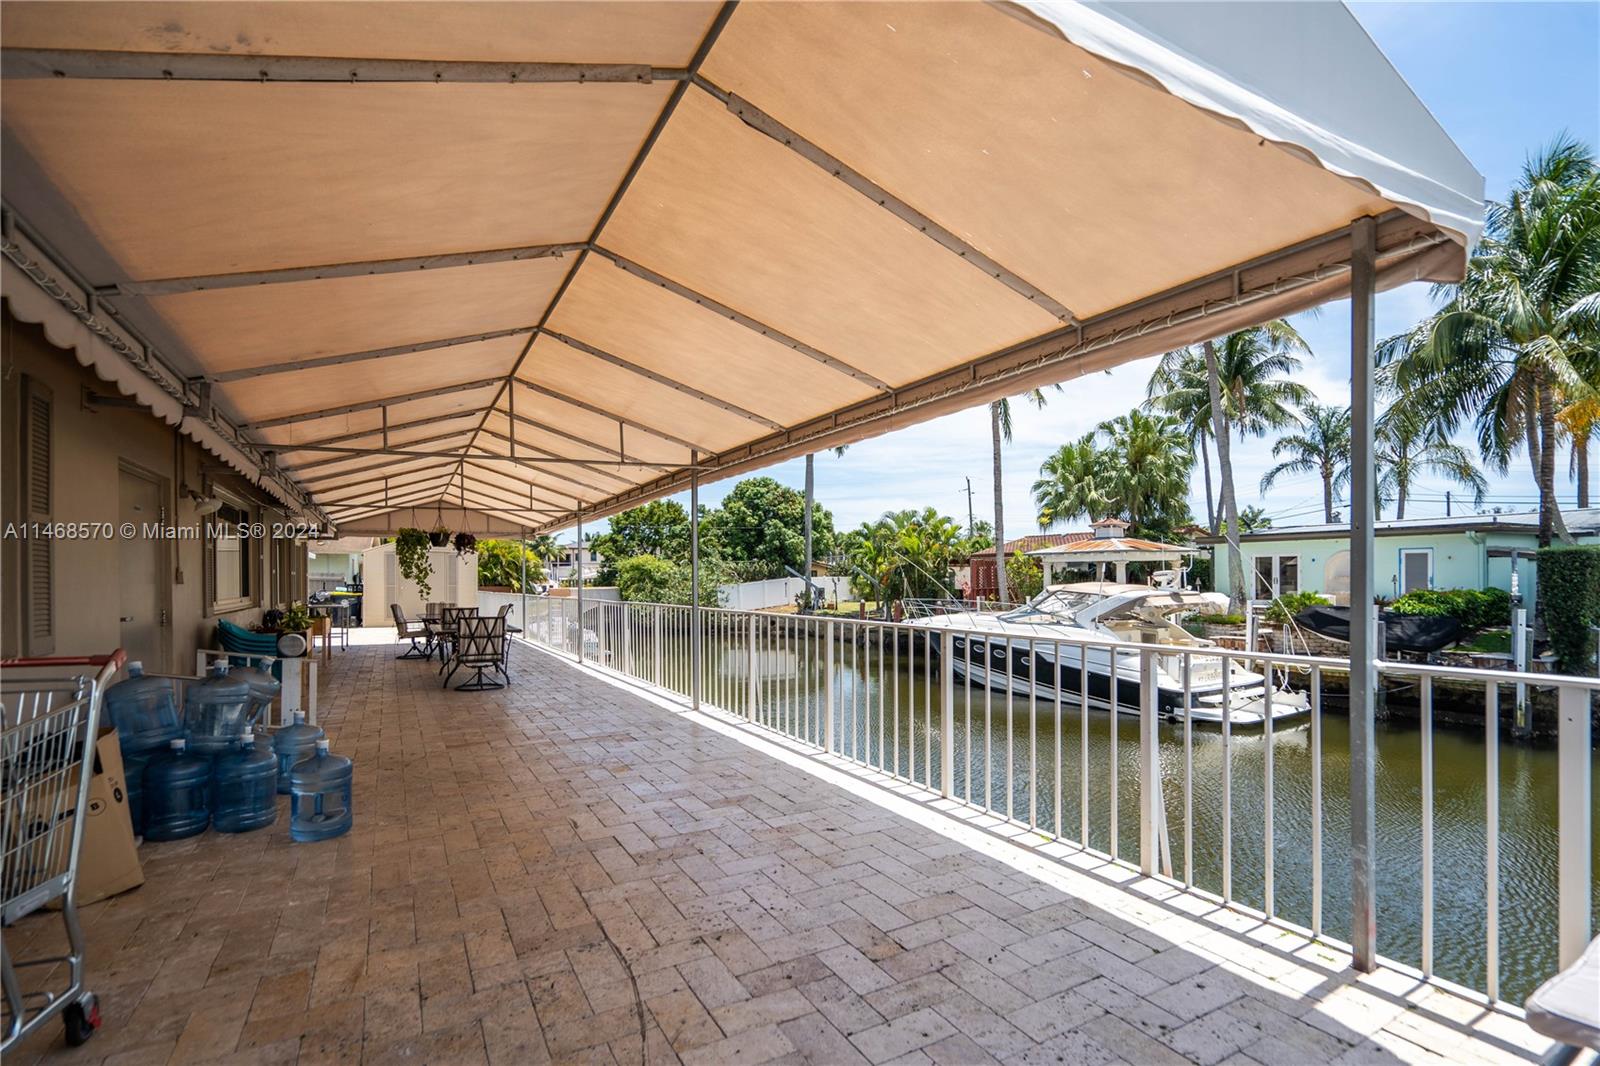 Rental Property at 1405 Nw 10th St, Dania Beach, Miami-Dade County, Florida -  - $1,900,000 MO.